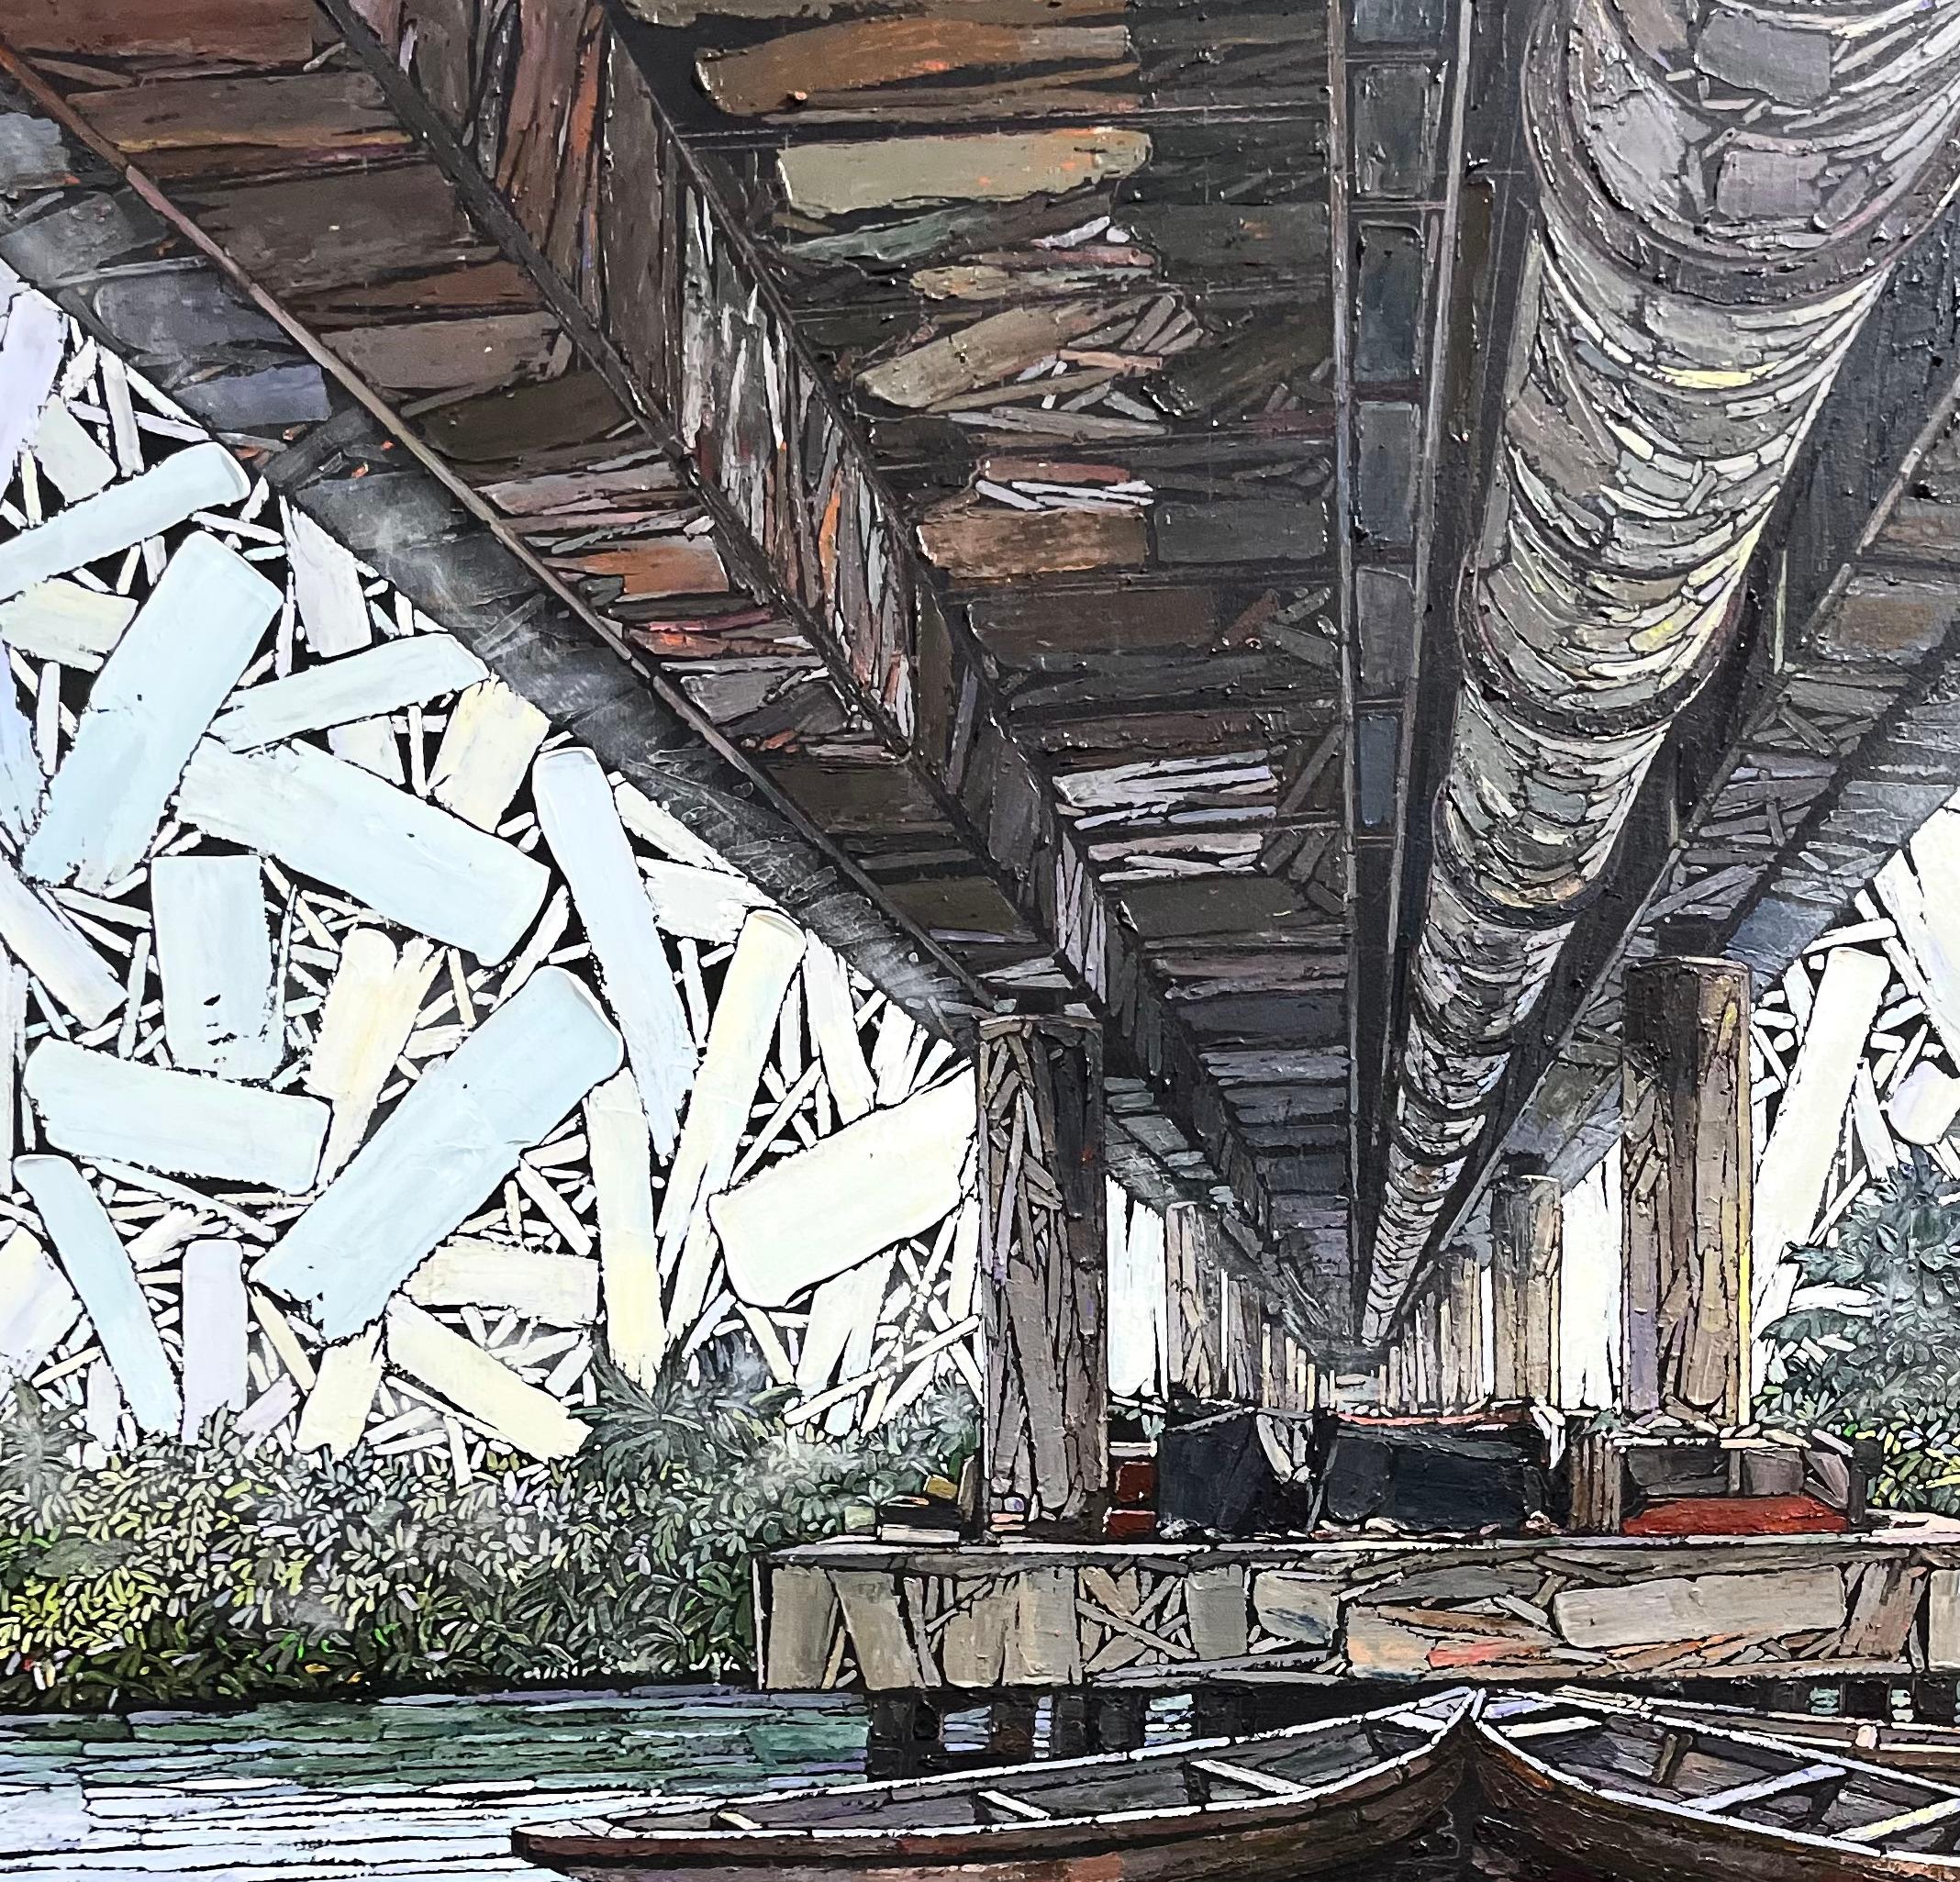 Life Under Bridge 2 - Painting by Segun Phillips